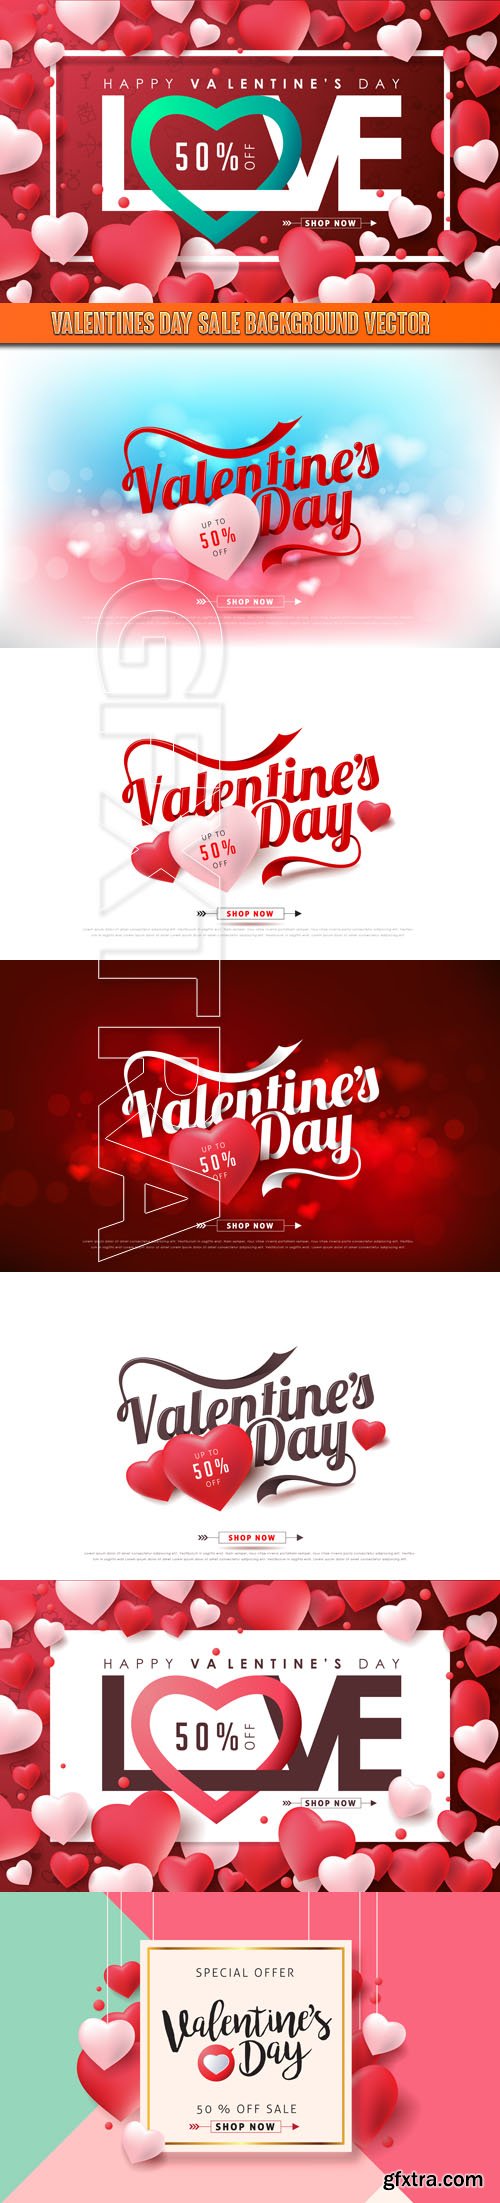 Valentines day sale background vector